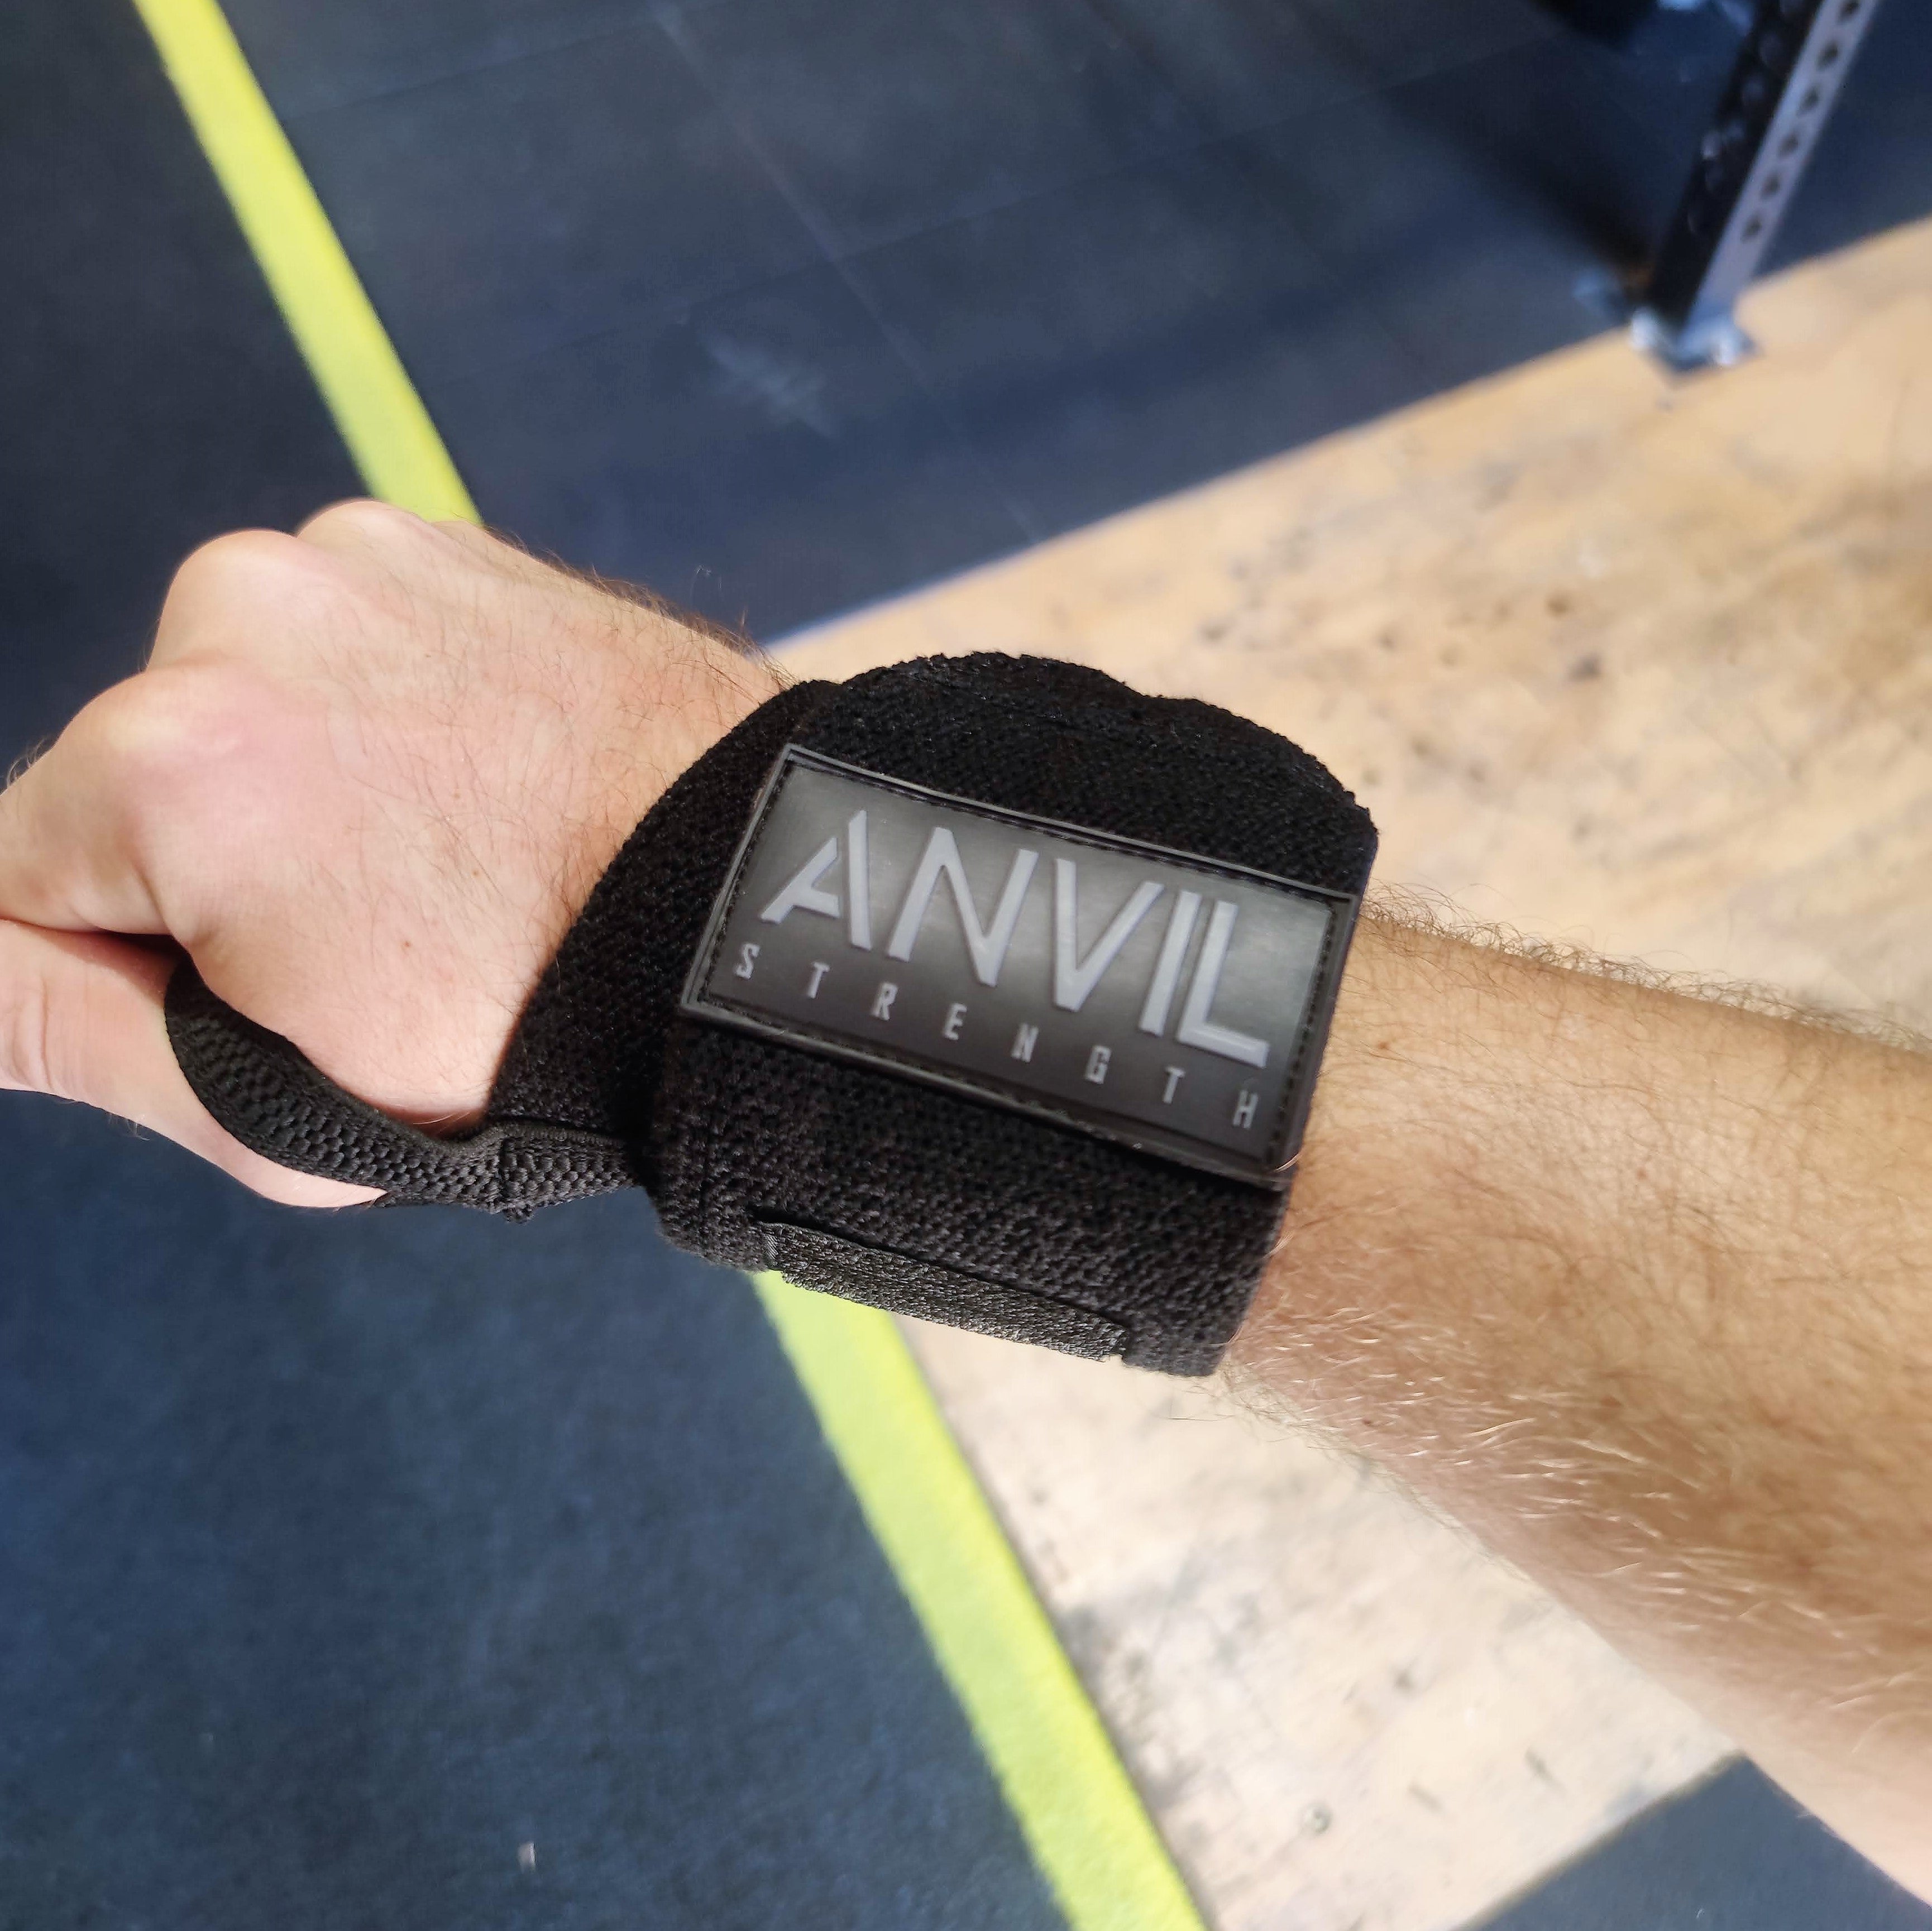 anvil-wrist-wrap-heavy-on-wrist-right